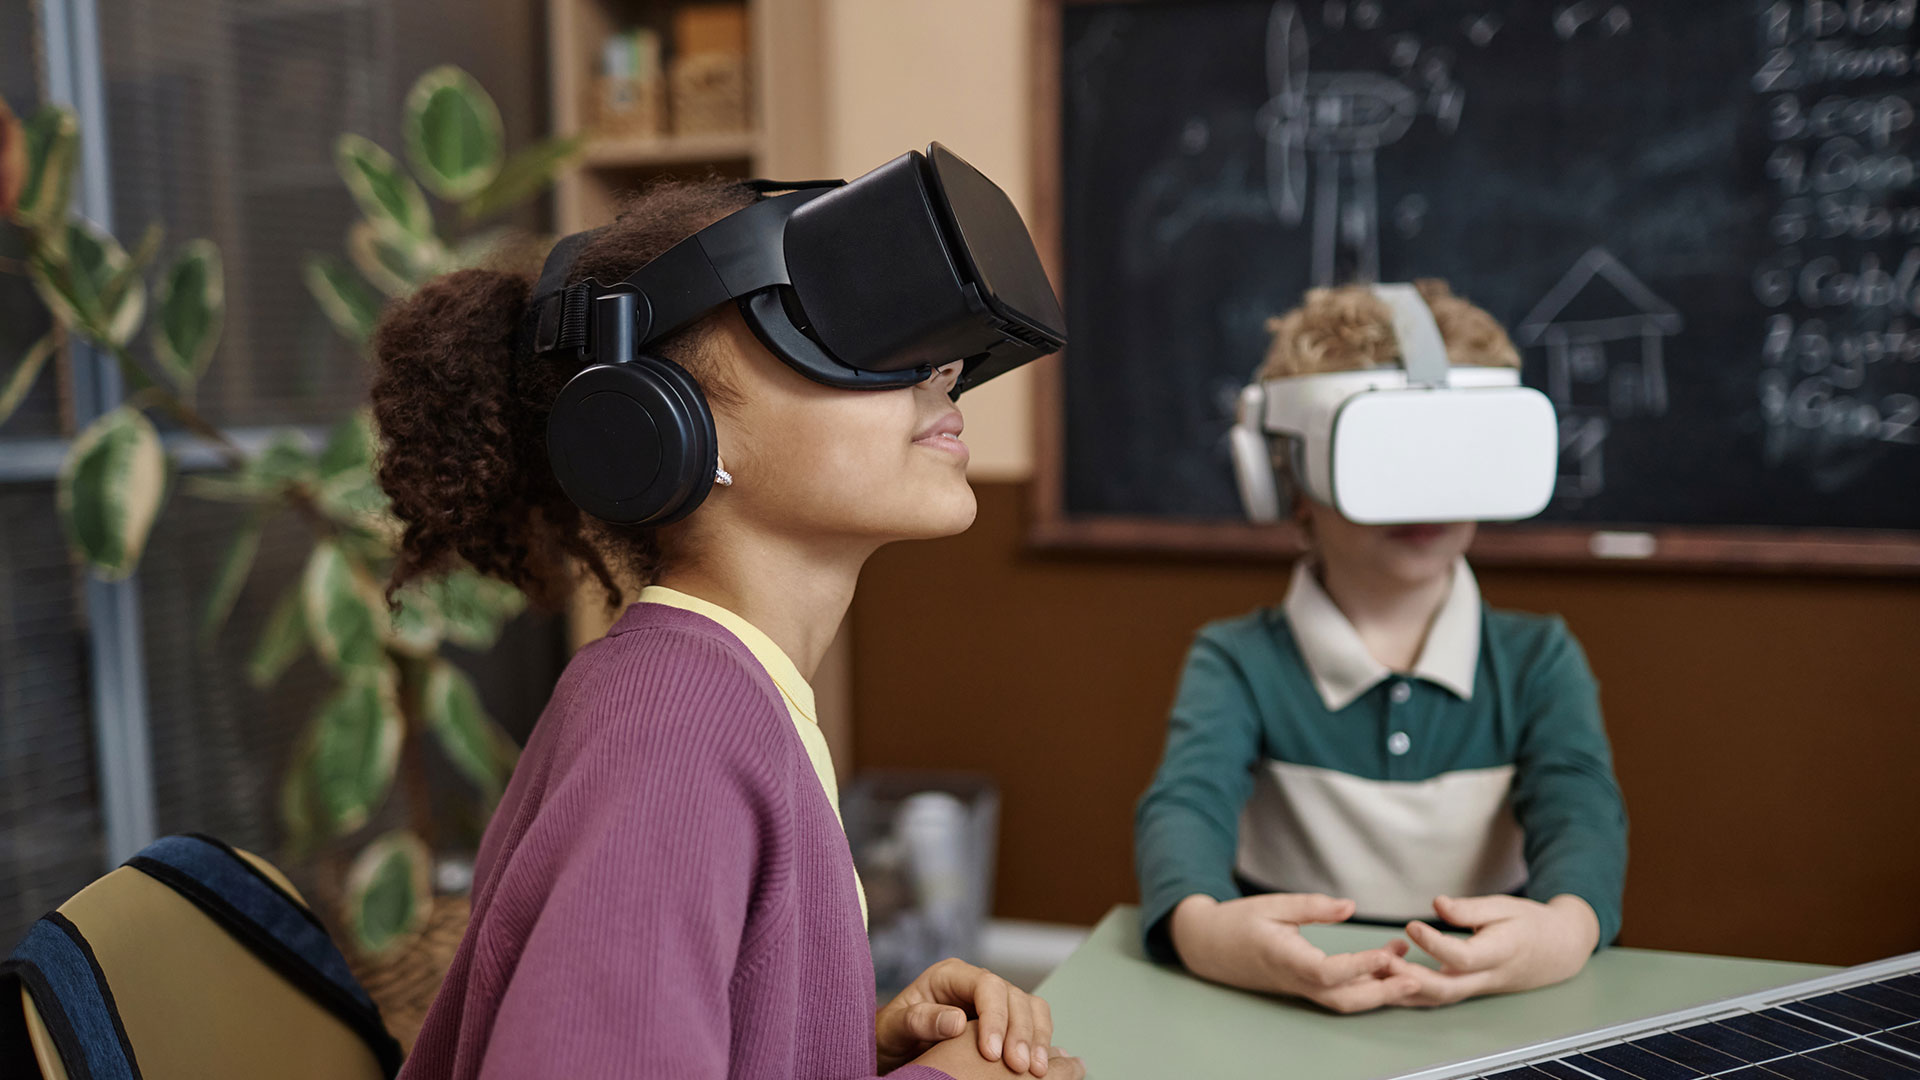 Kids in VR headset.